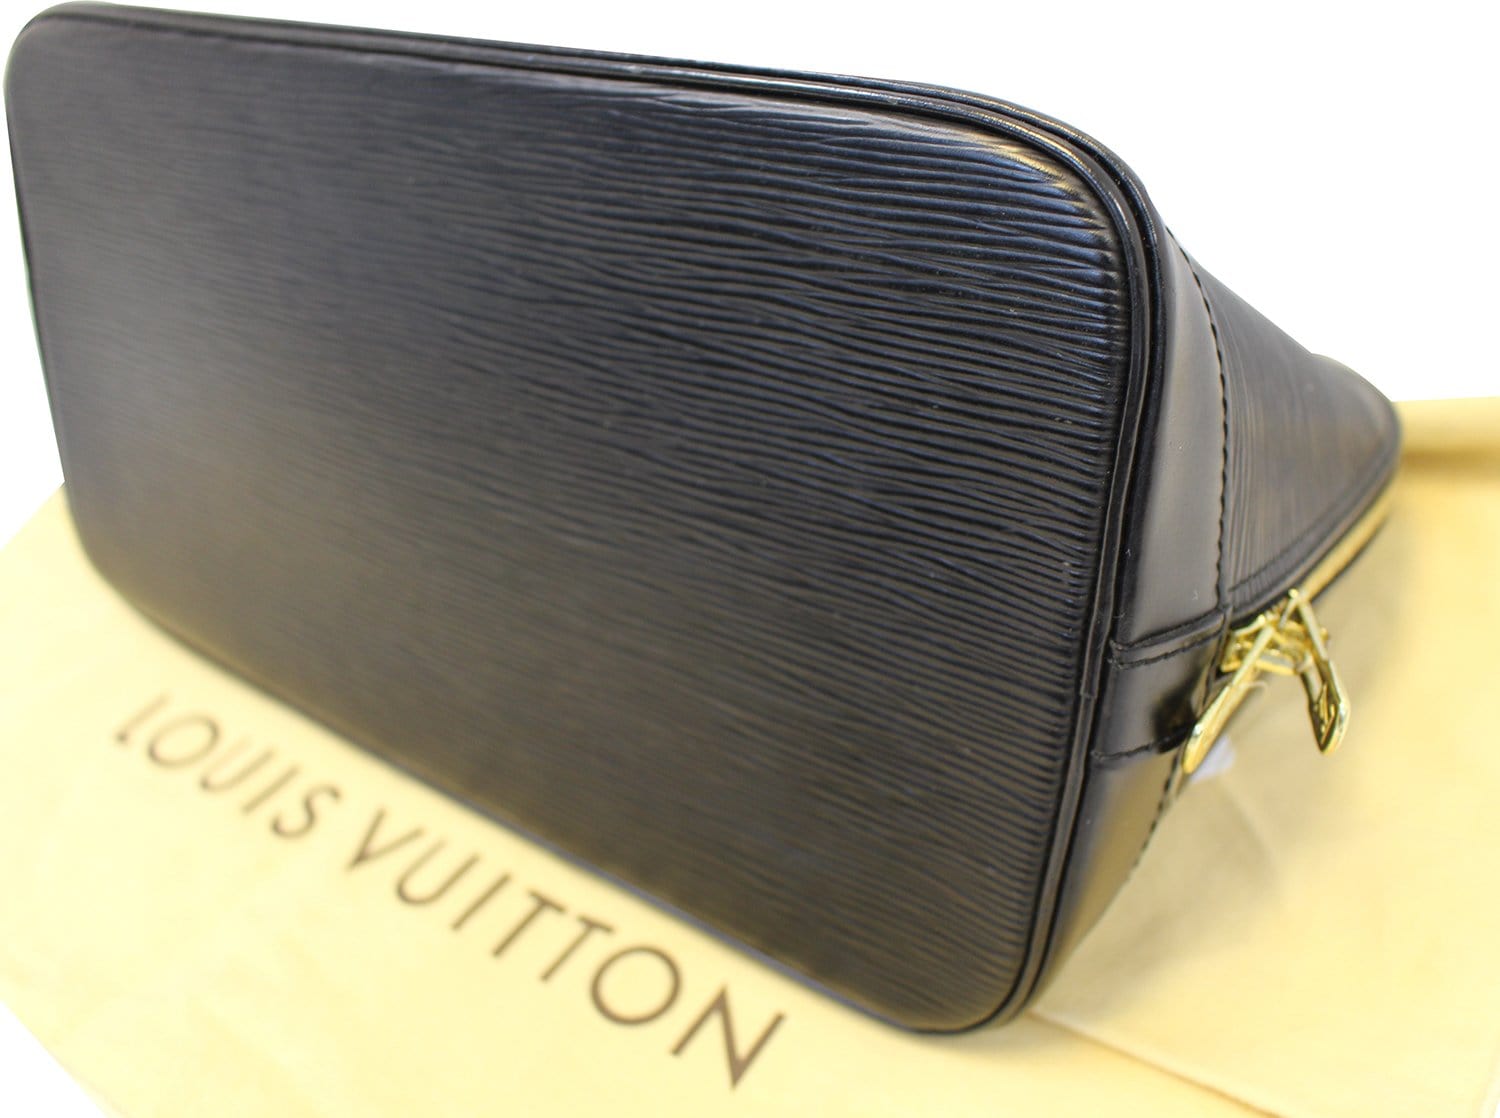 Luxury Louis Vuitton EPI ALMA PM Black Color Handbag Editorial Image -  Image of decoration, haute: 152042535